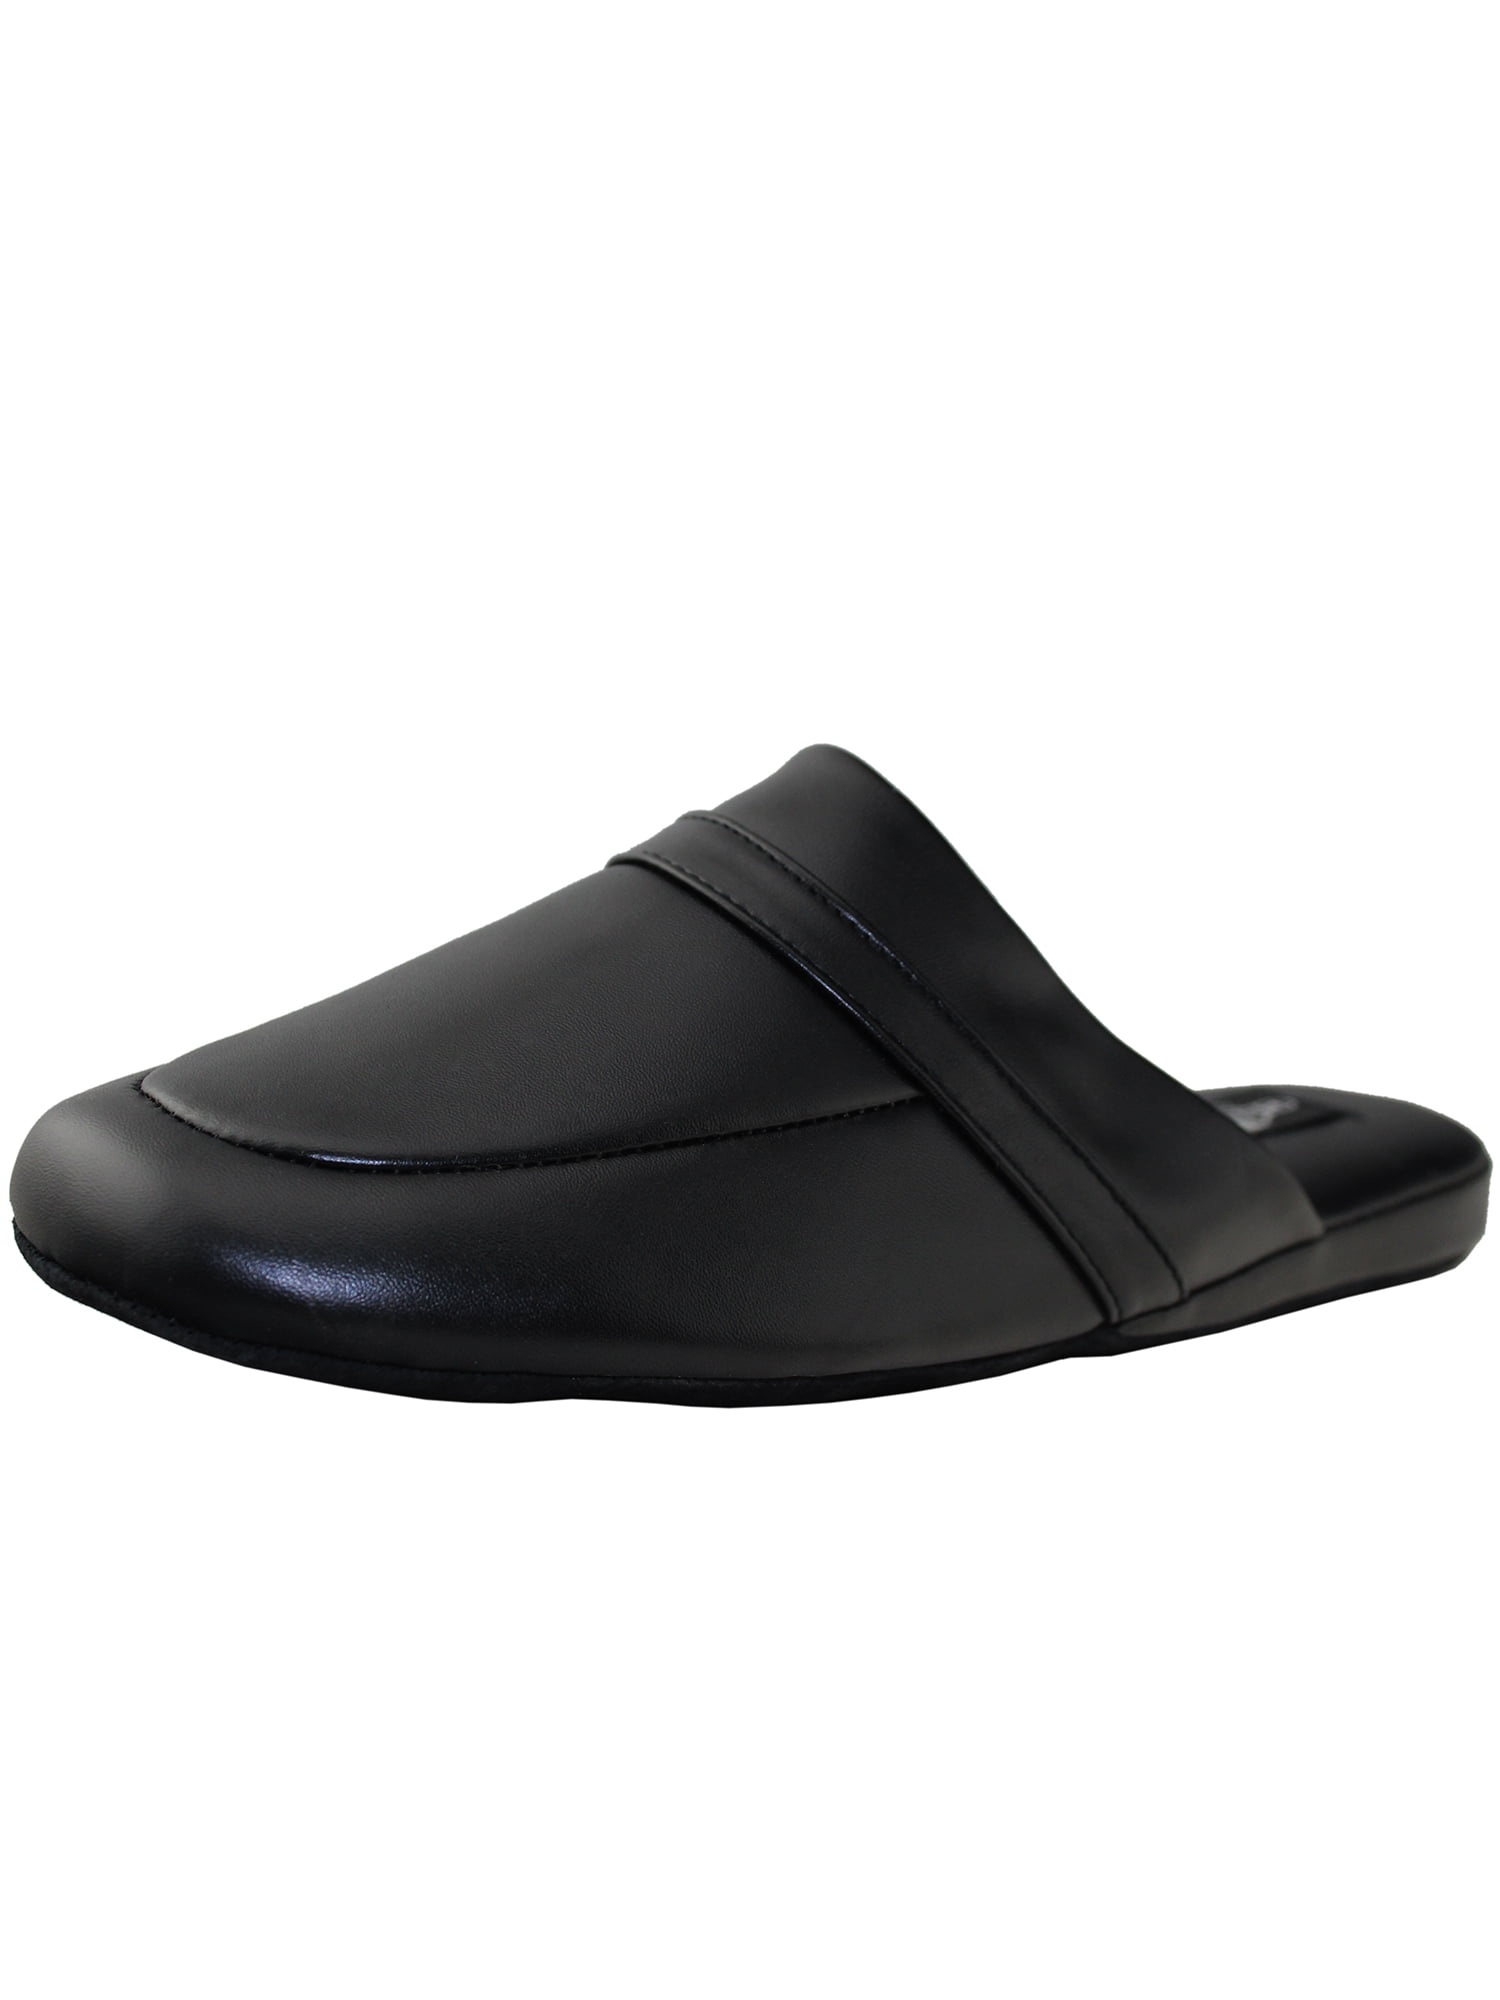 FASHION VICTIM men slippers/sandals 2226 : Amazon.in: Fashion